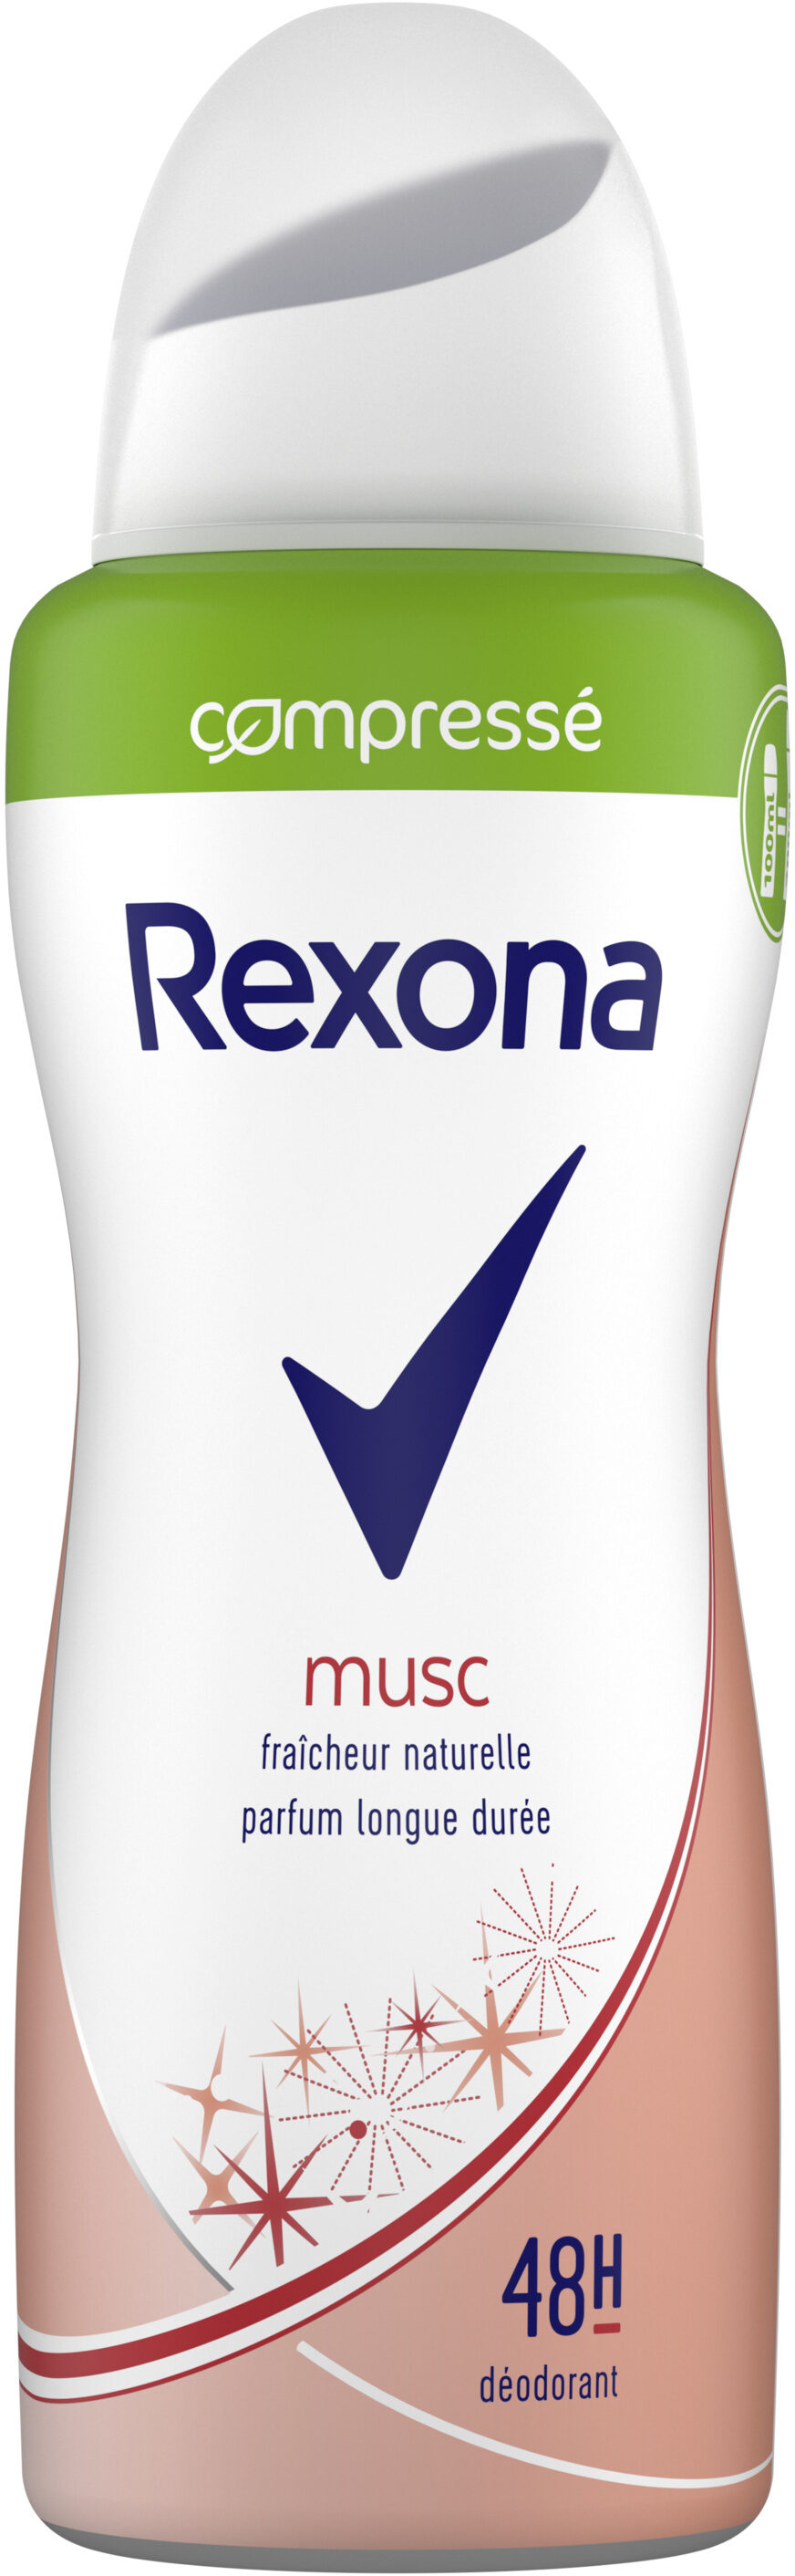 Rexona Déodorant Femme Spray Antibactérien Musc Compressé 100ml - Product - fr